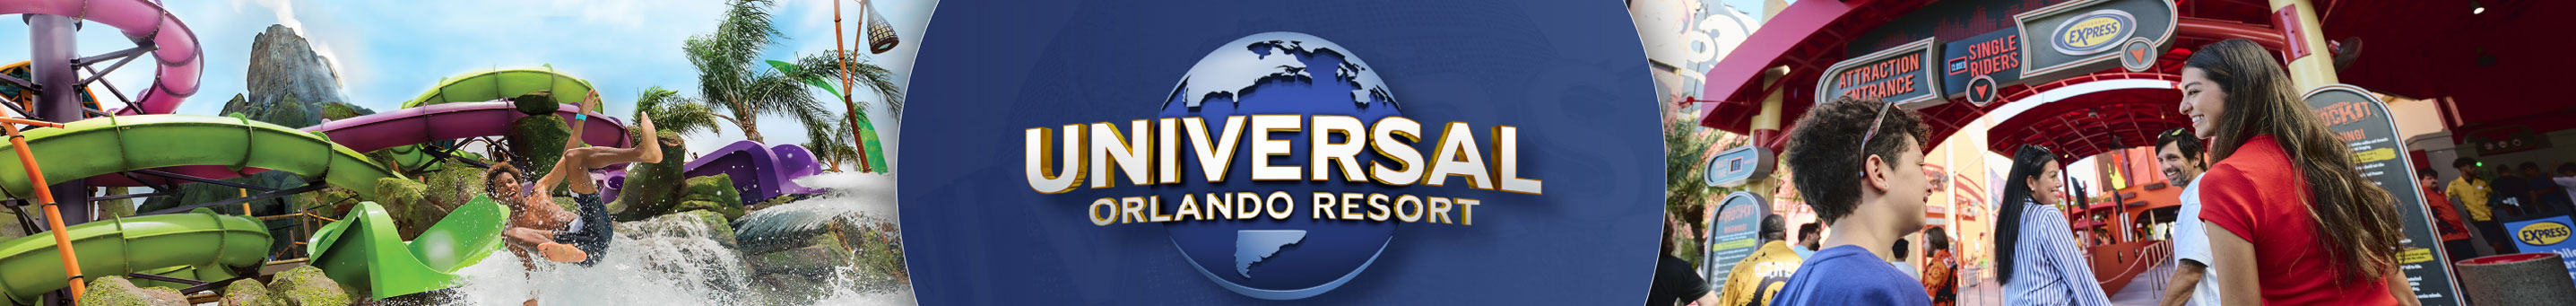 Universal Orlando Resort Discount Tickets